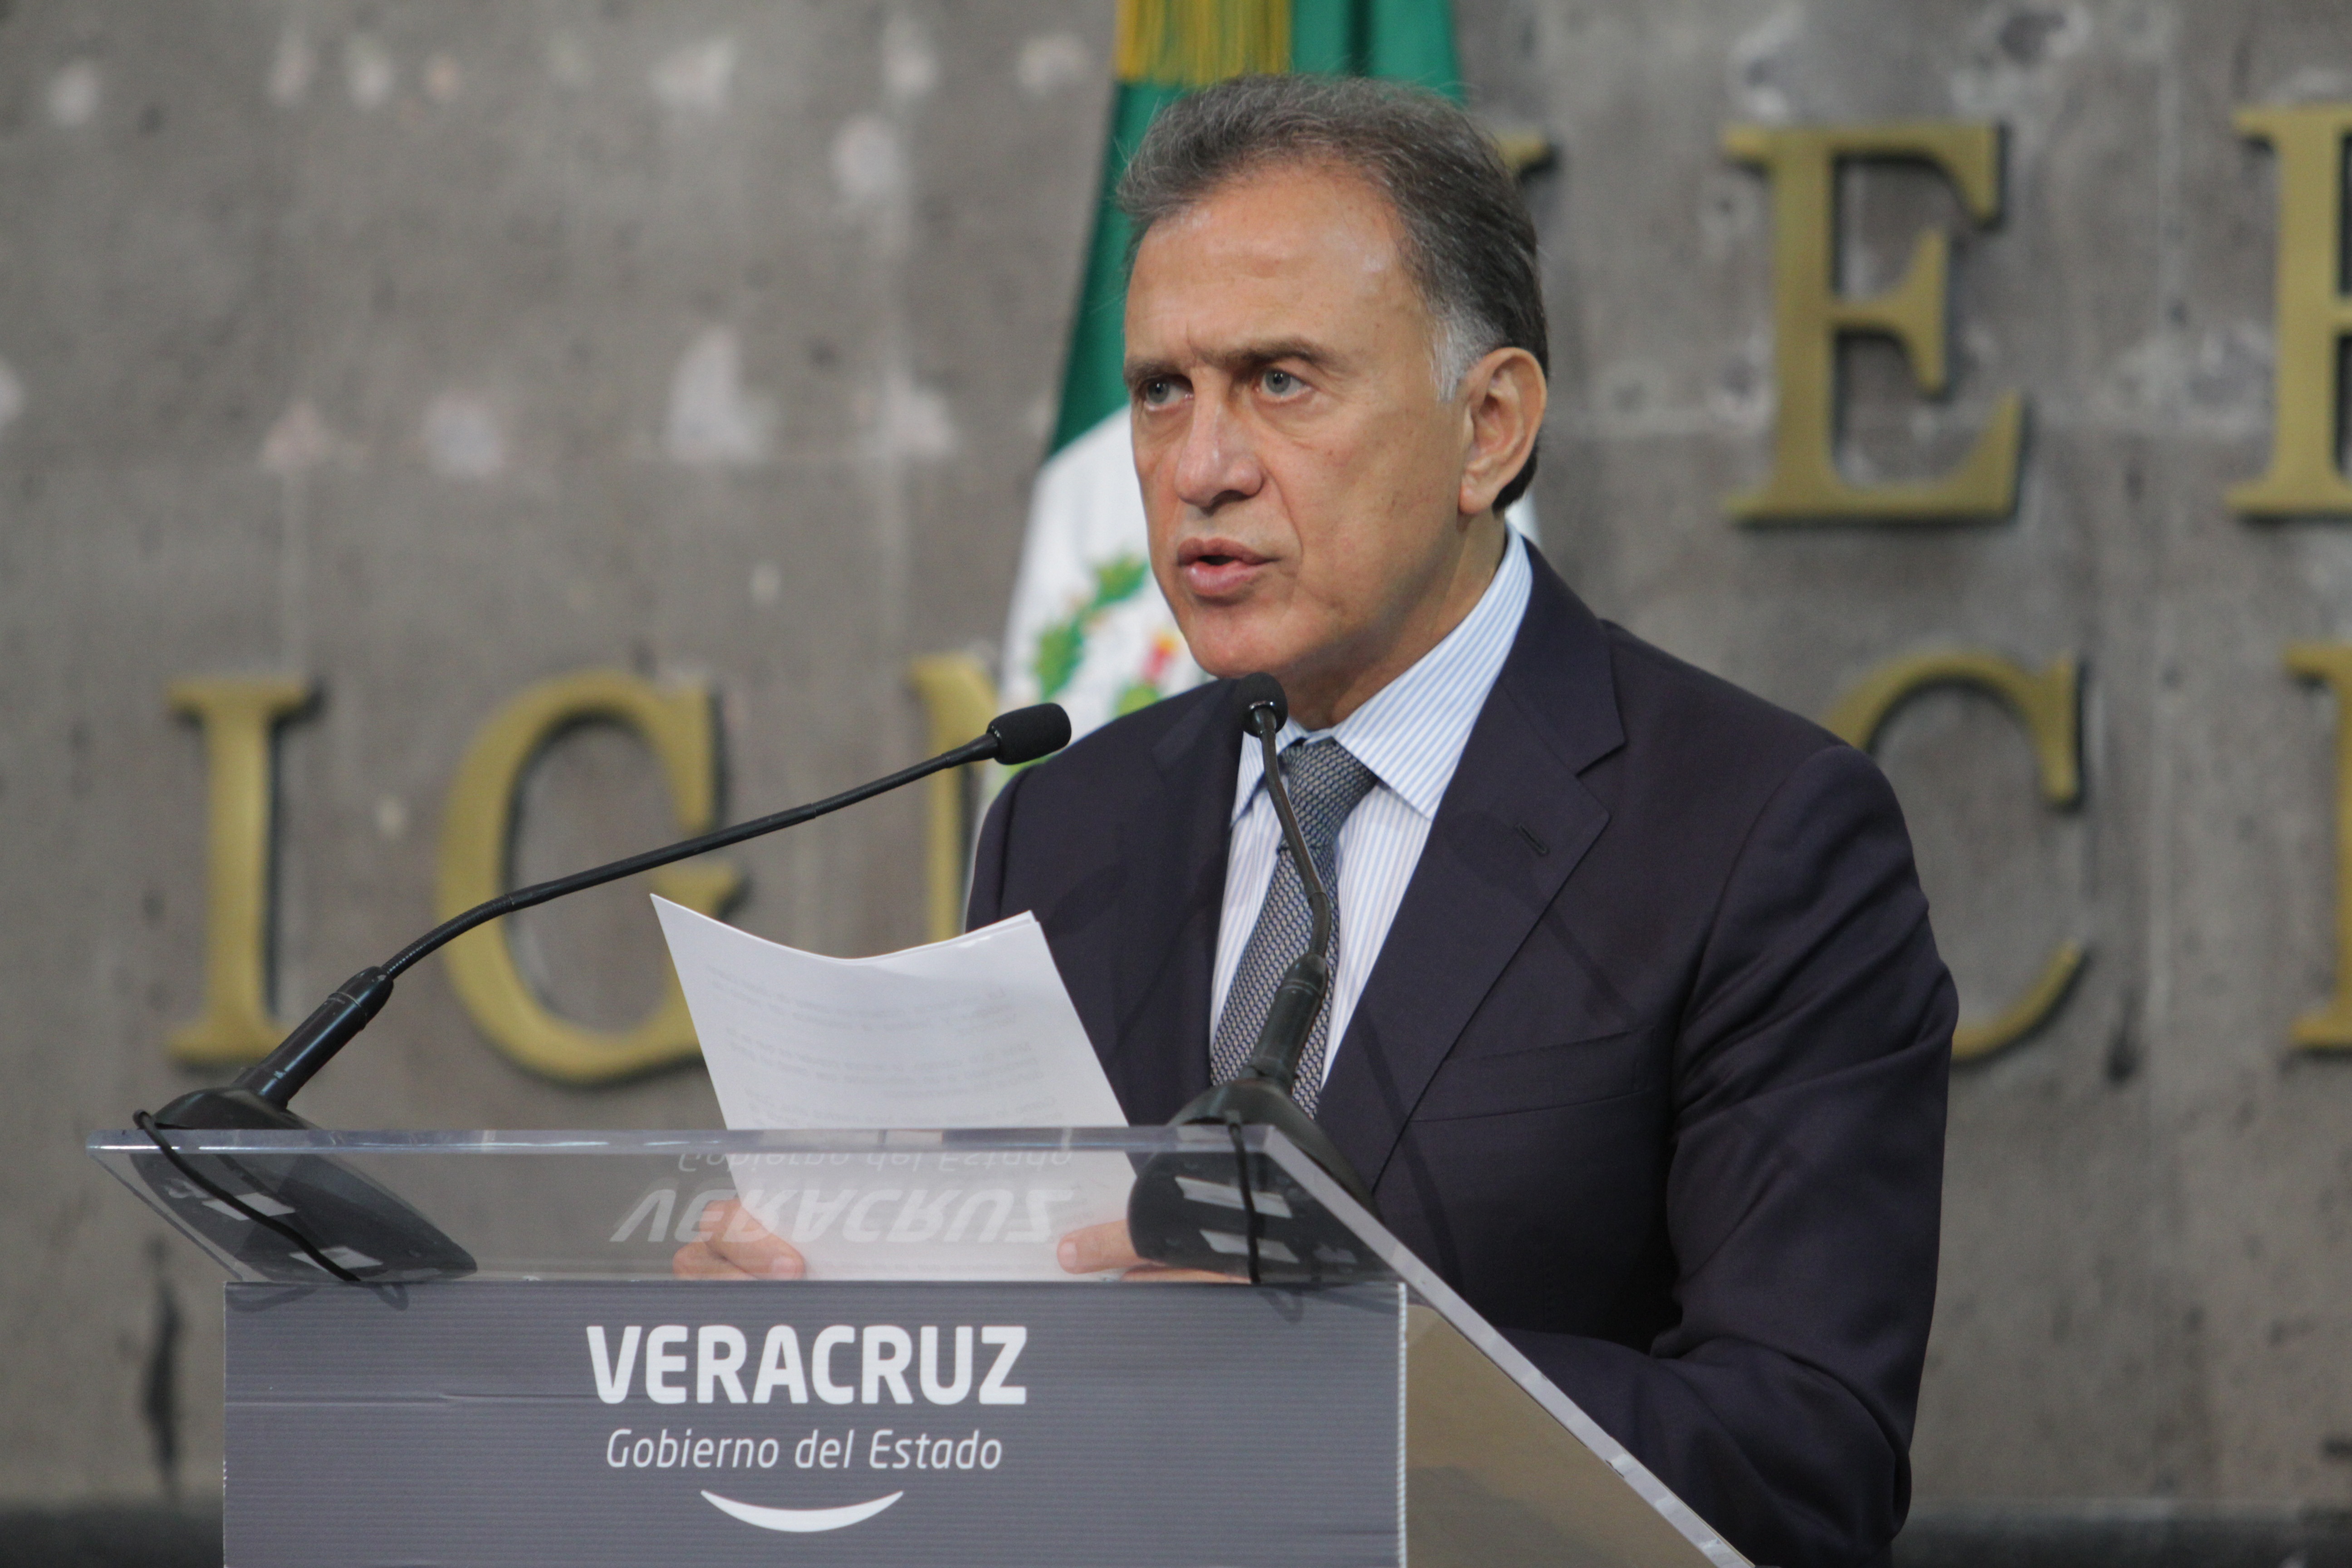 Miguel Ángel Yunes Linares replaced Javier Duarte after his departure from the Veracruz government (EFE/Saúl Ramírez/File)